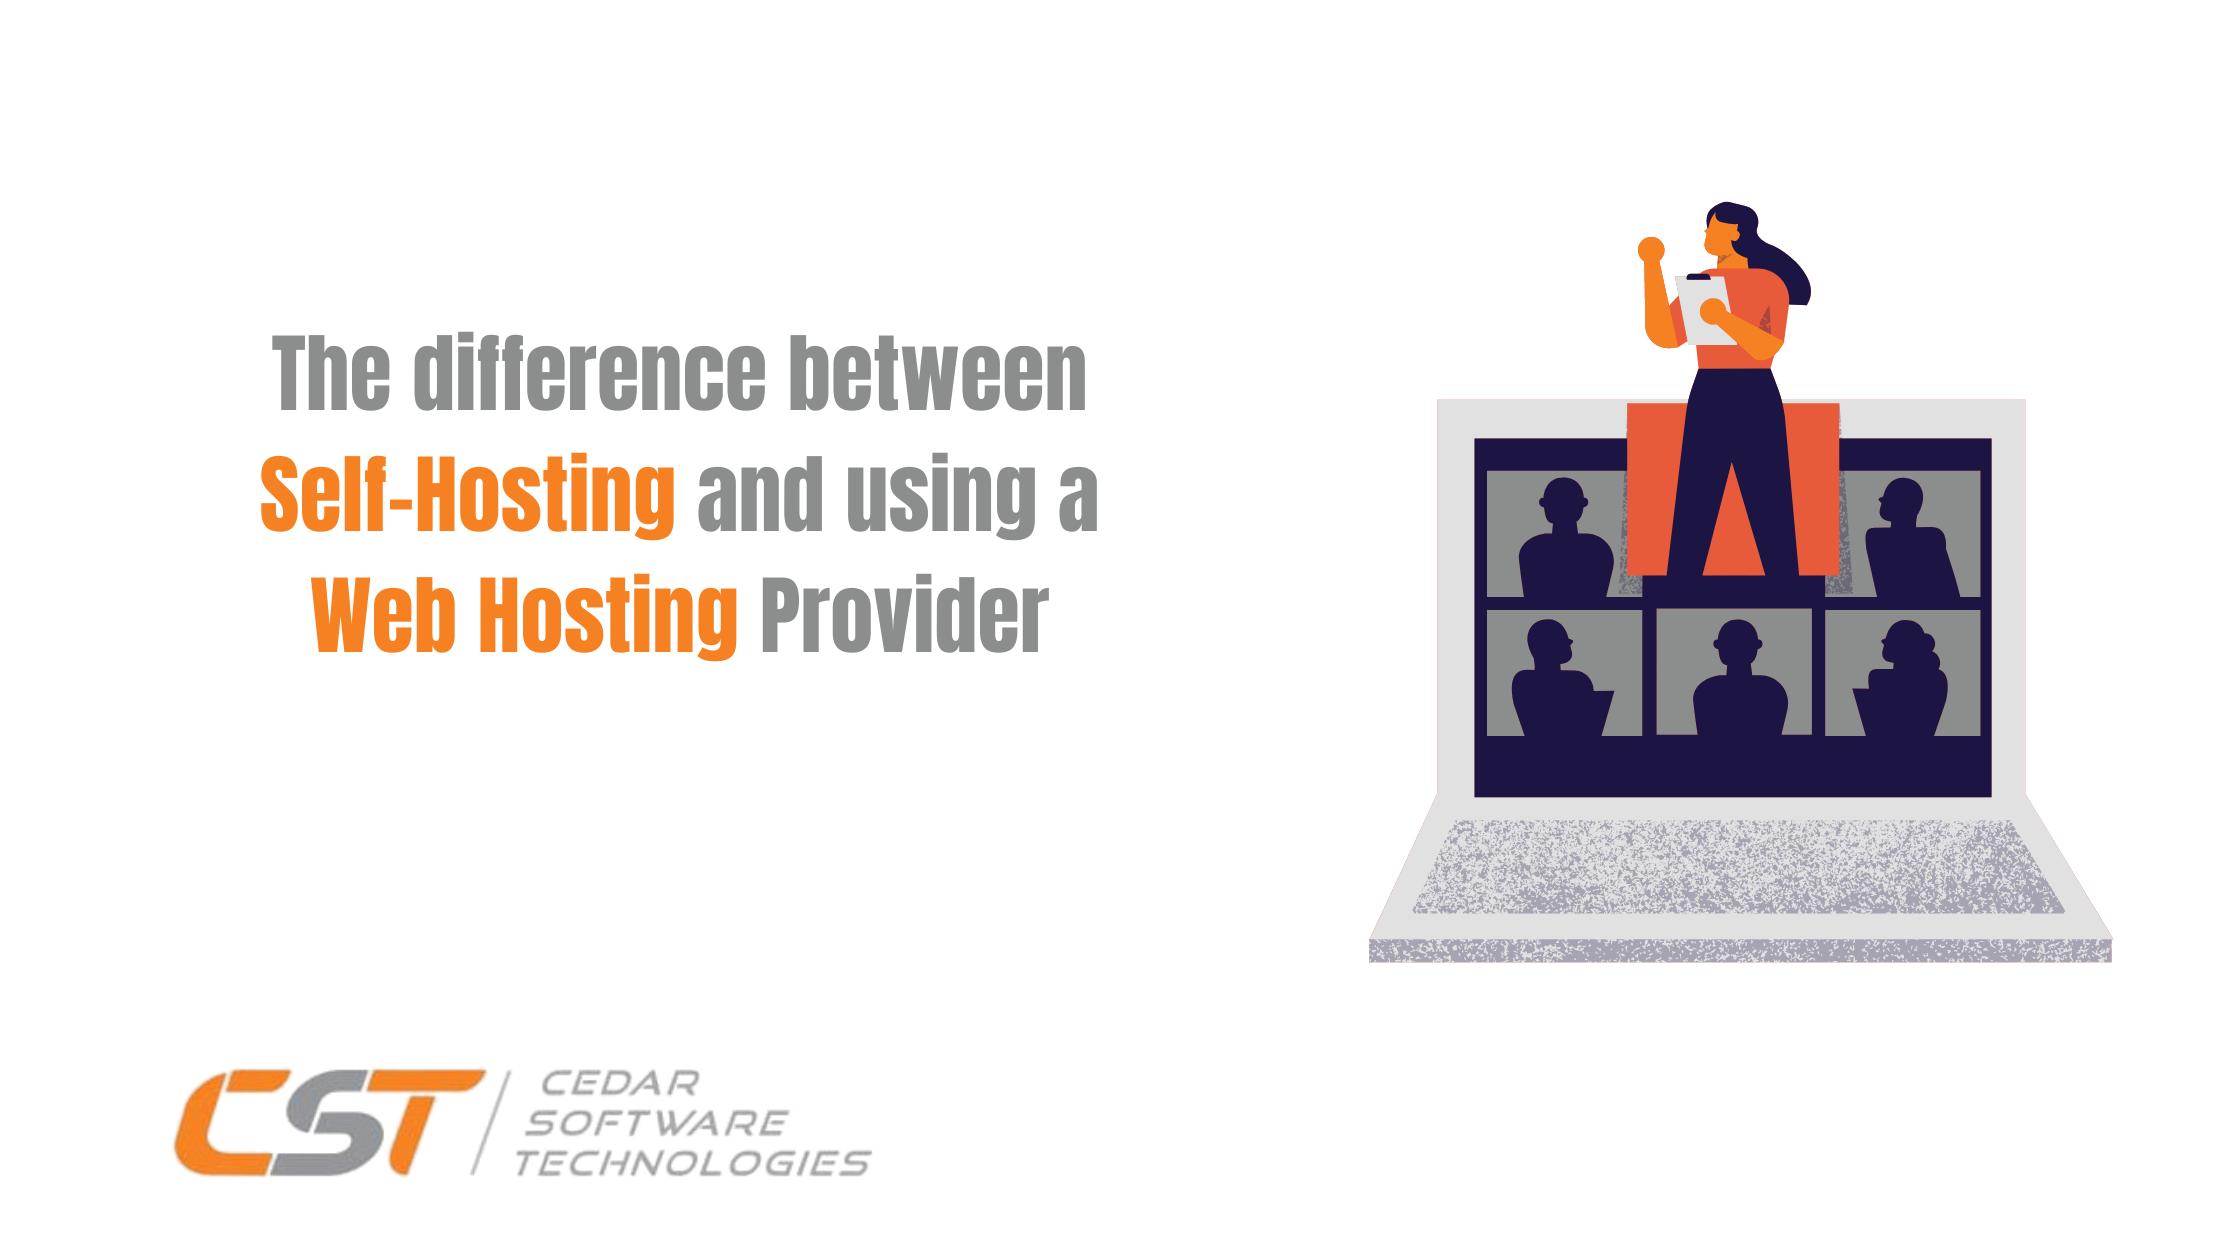 Self-Hosting and Web Hosting Provider